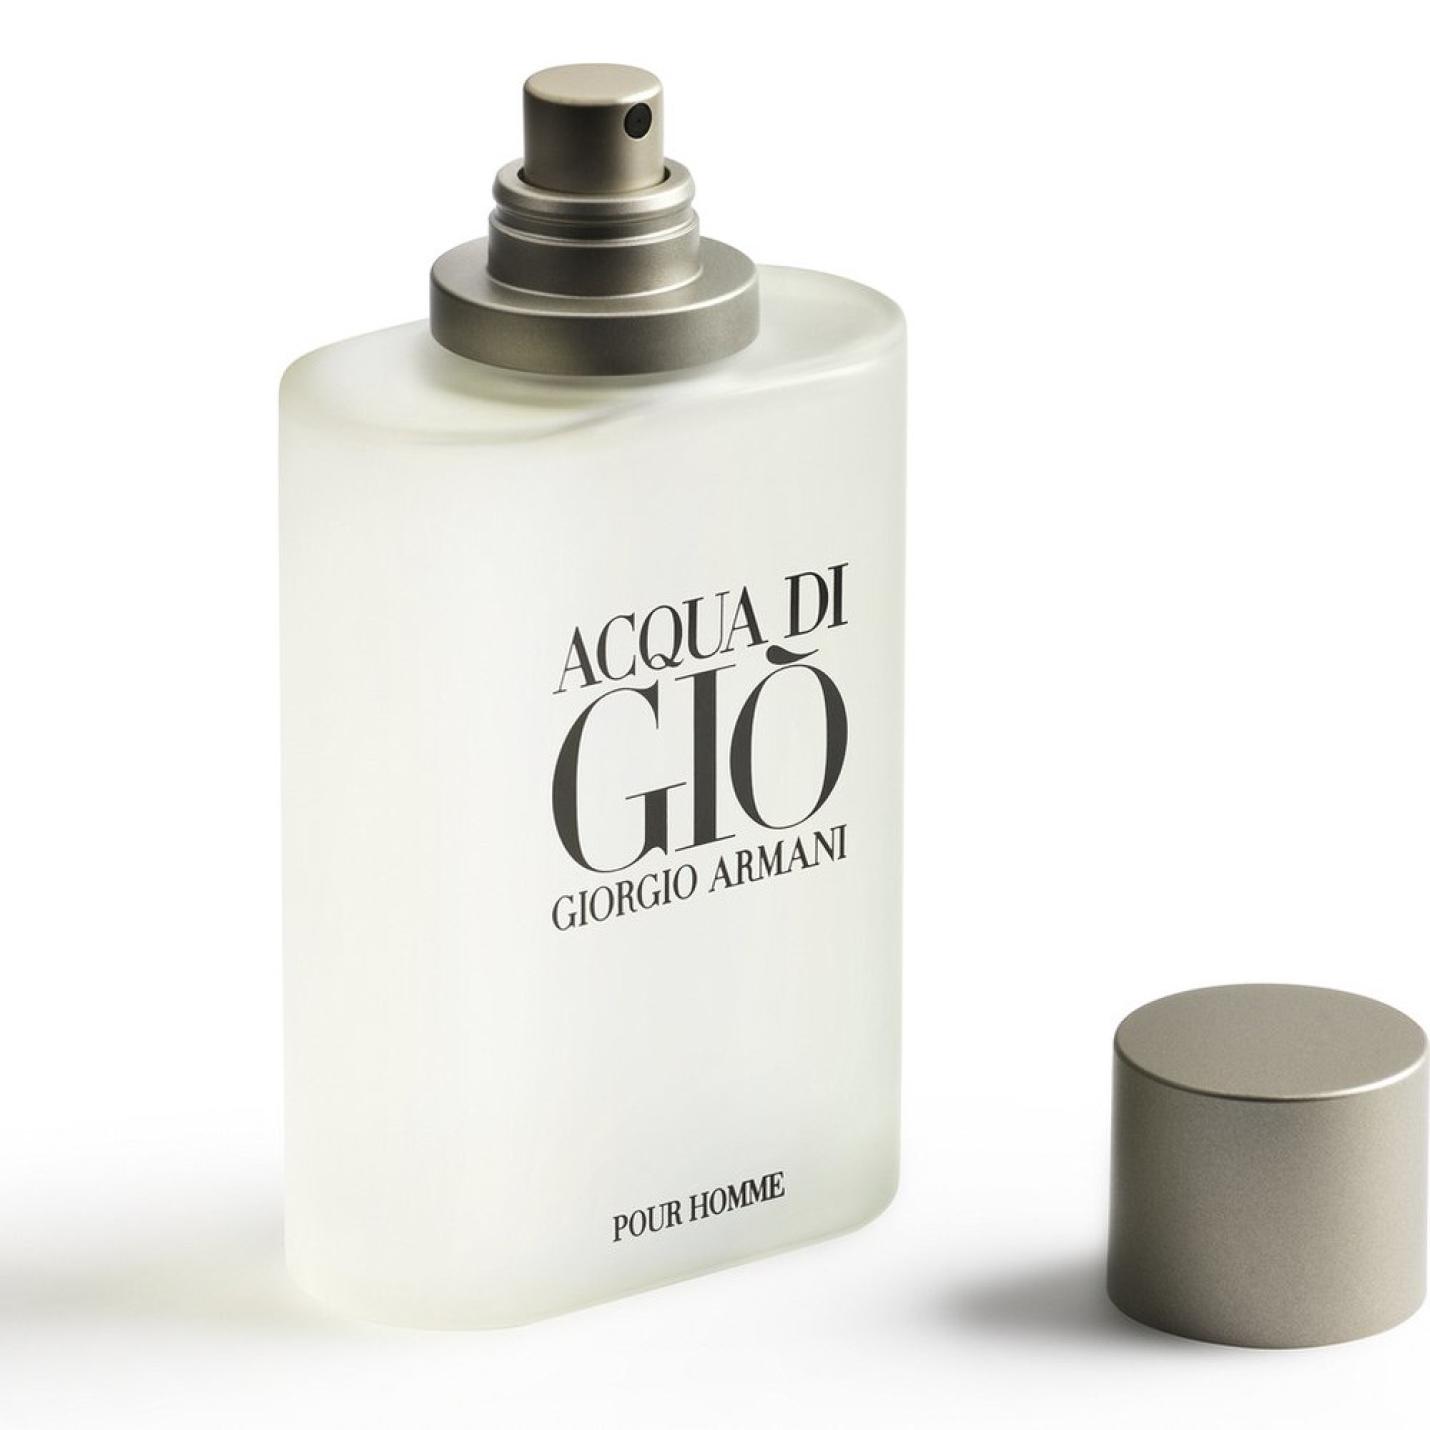 Acqua di Gio parfum van Giorgio Armani